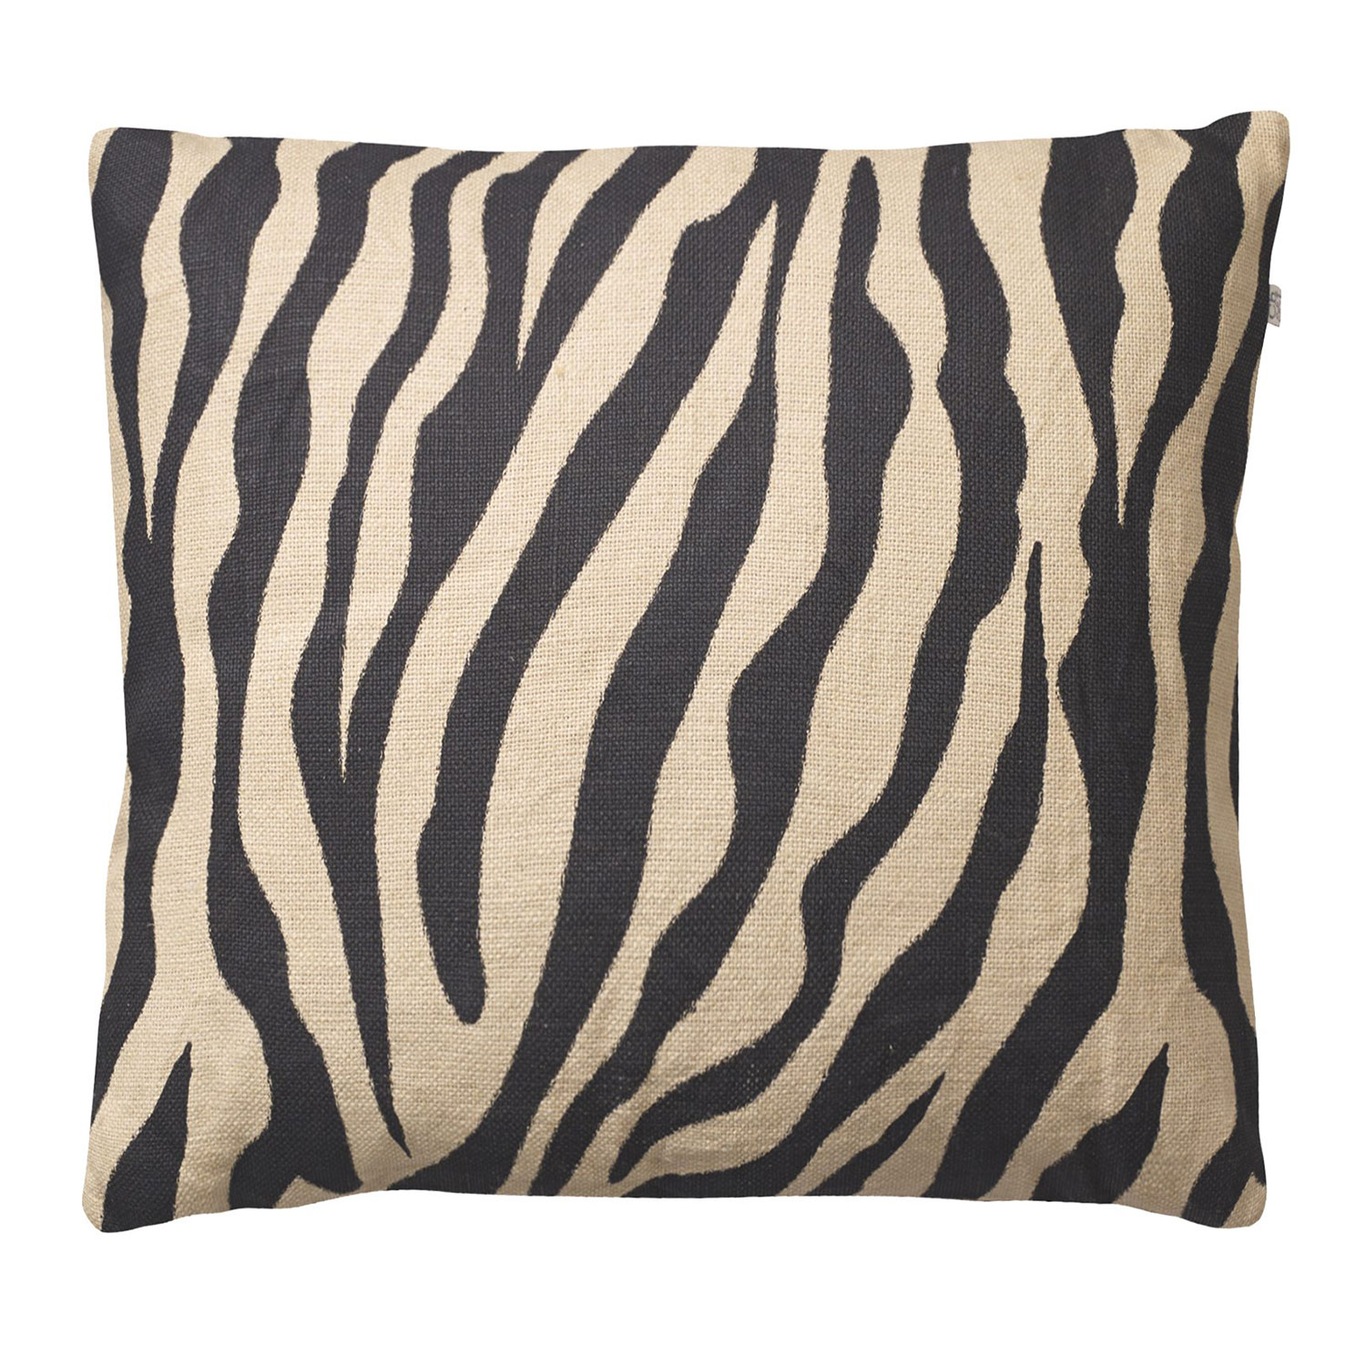 Zebra Tyynynpäällinen 50x50cm, Beige/ Musta